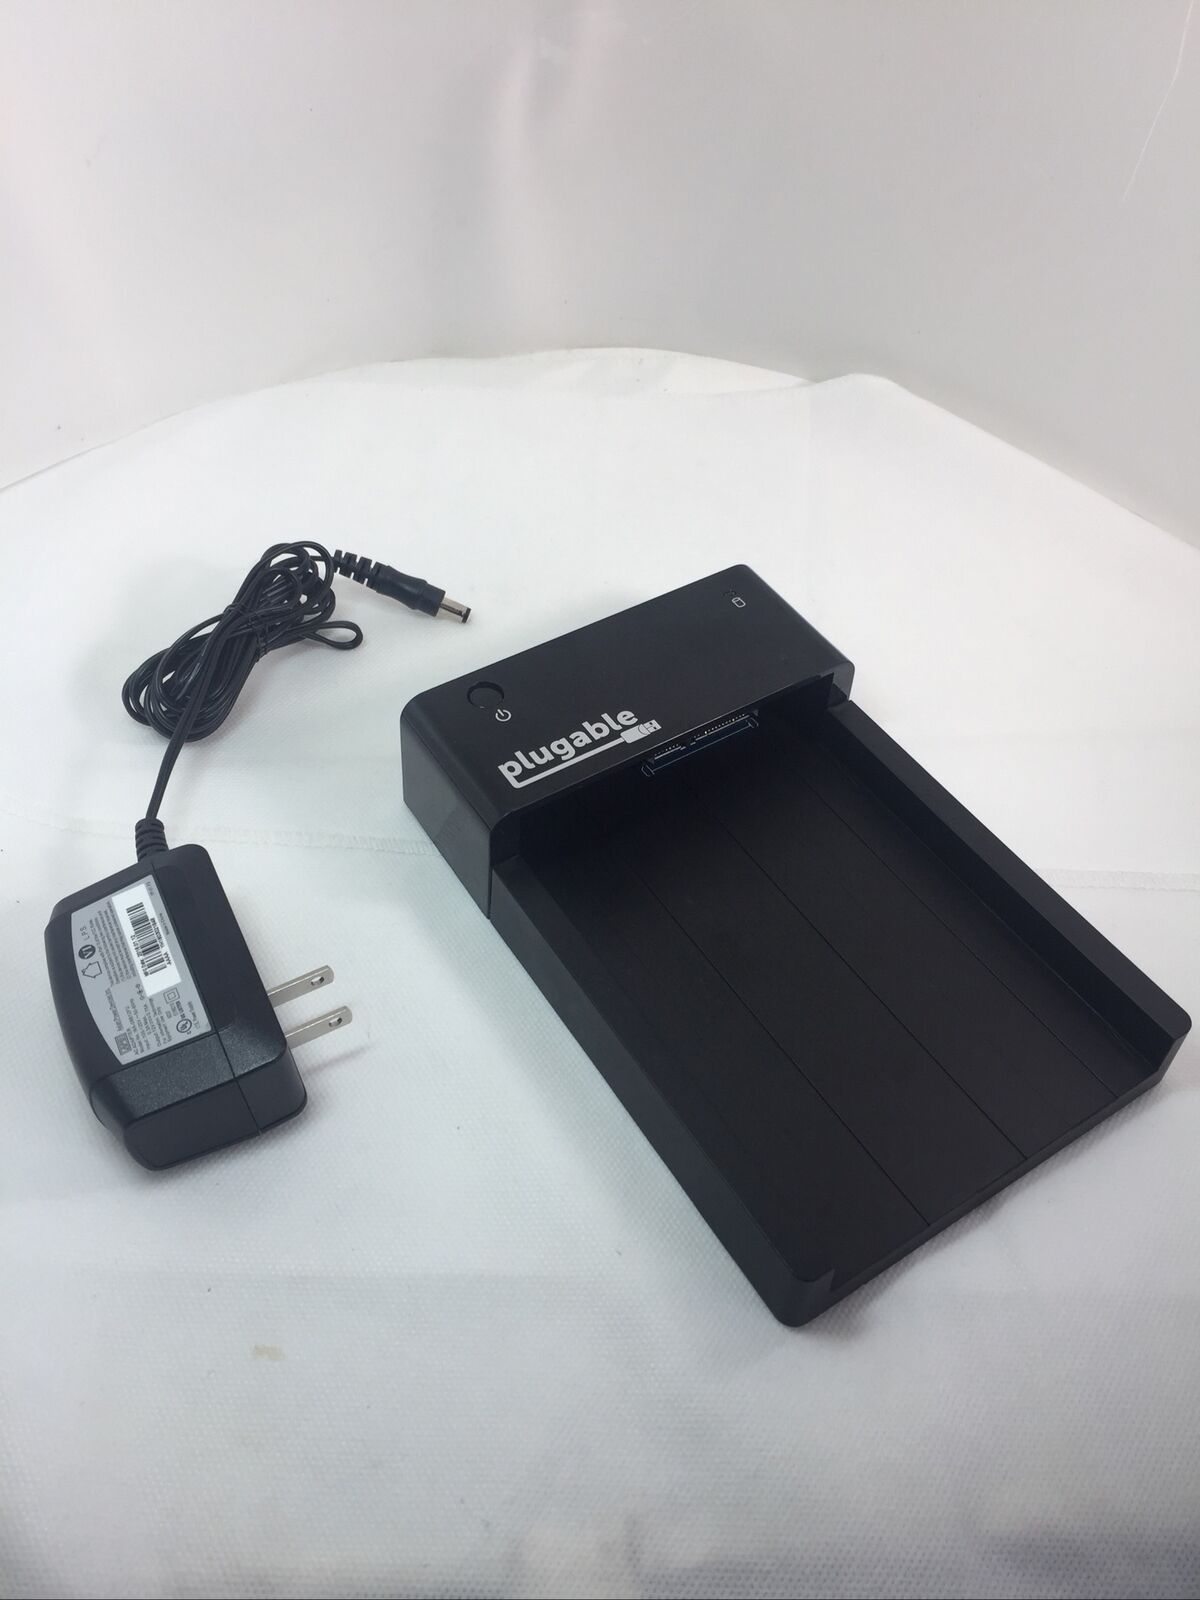 The Plugable USB3-SATA-UASP1  USB 3.0 3.5”/2.5” SATA HDD Docking Station